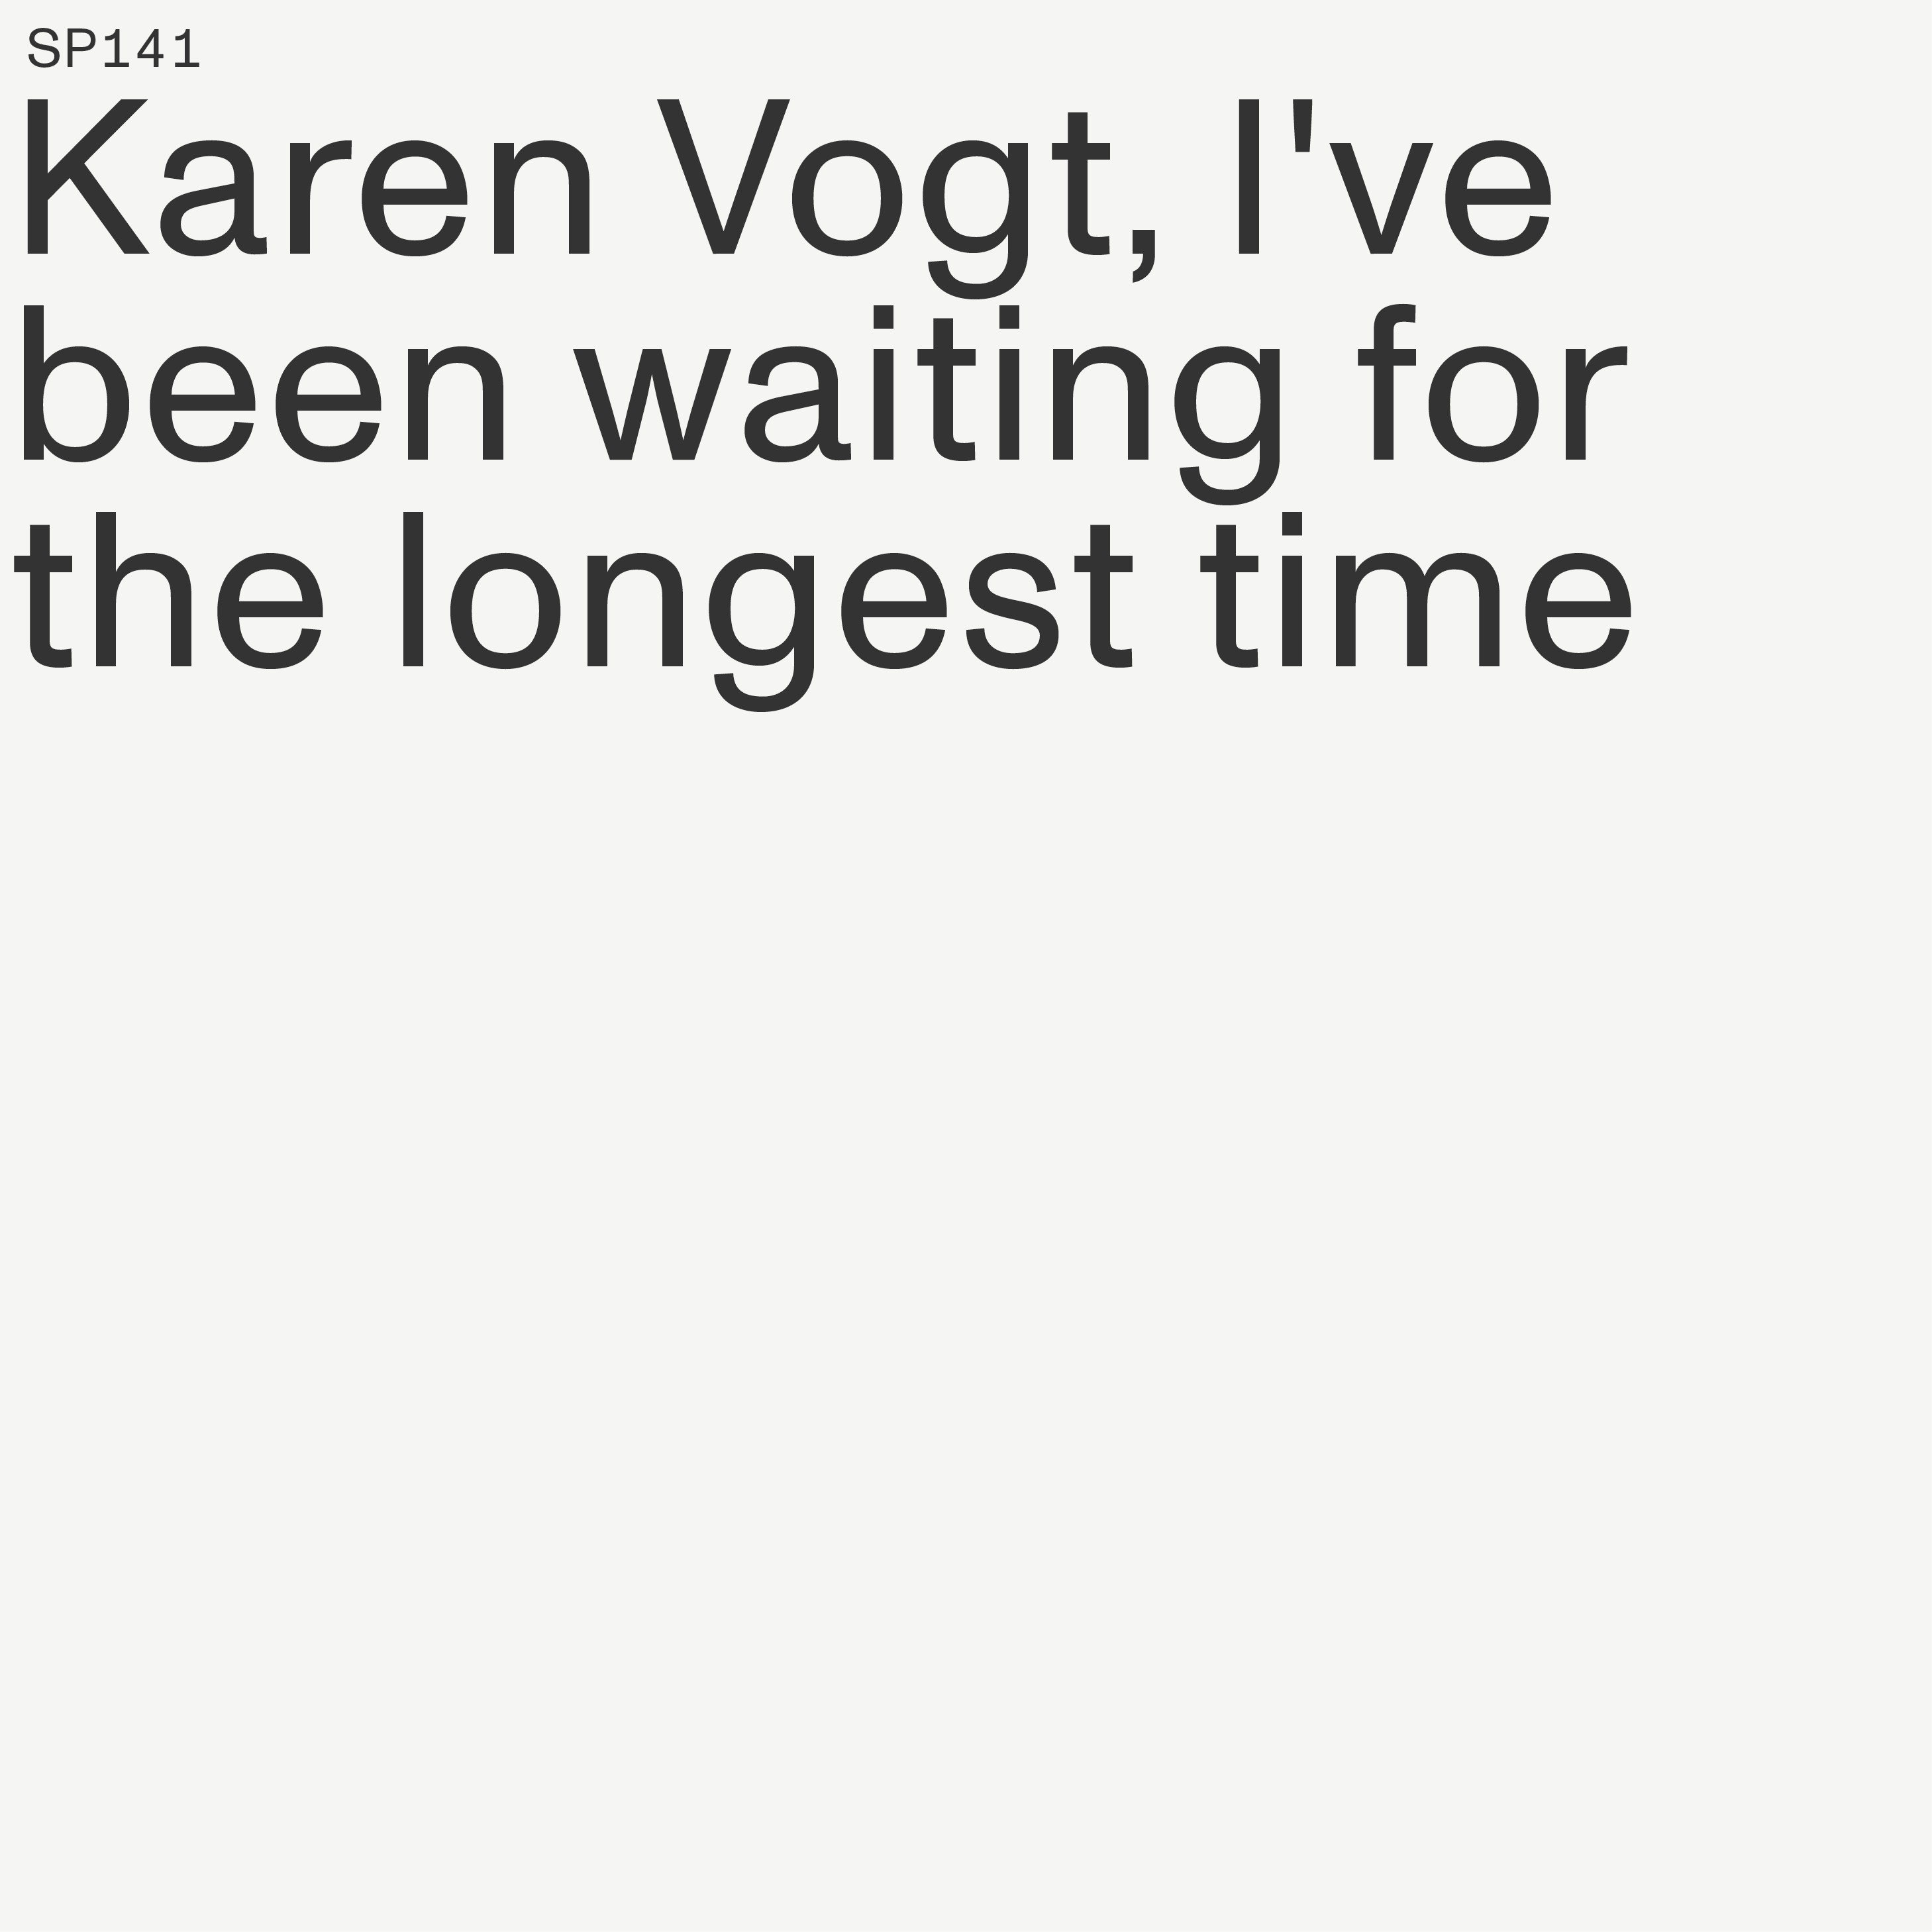 Karen Vogt Ive been waiting for the longest time uabab